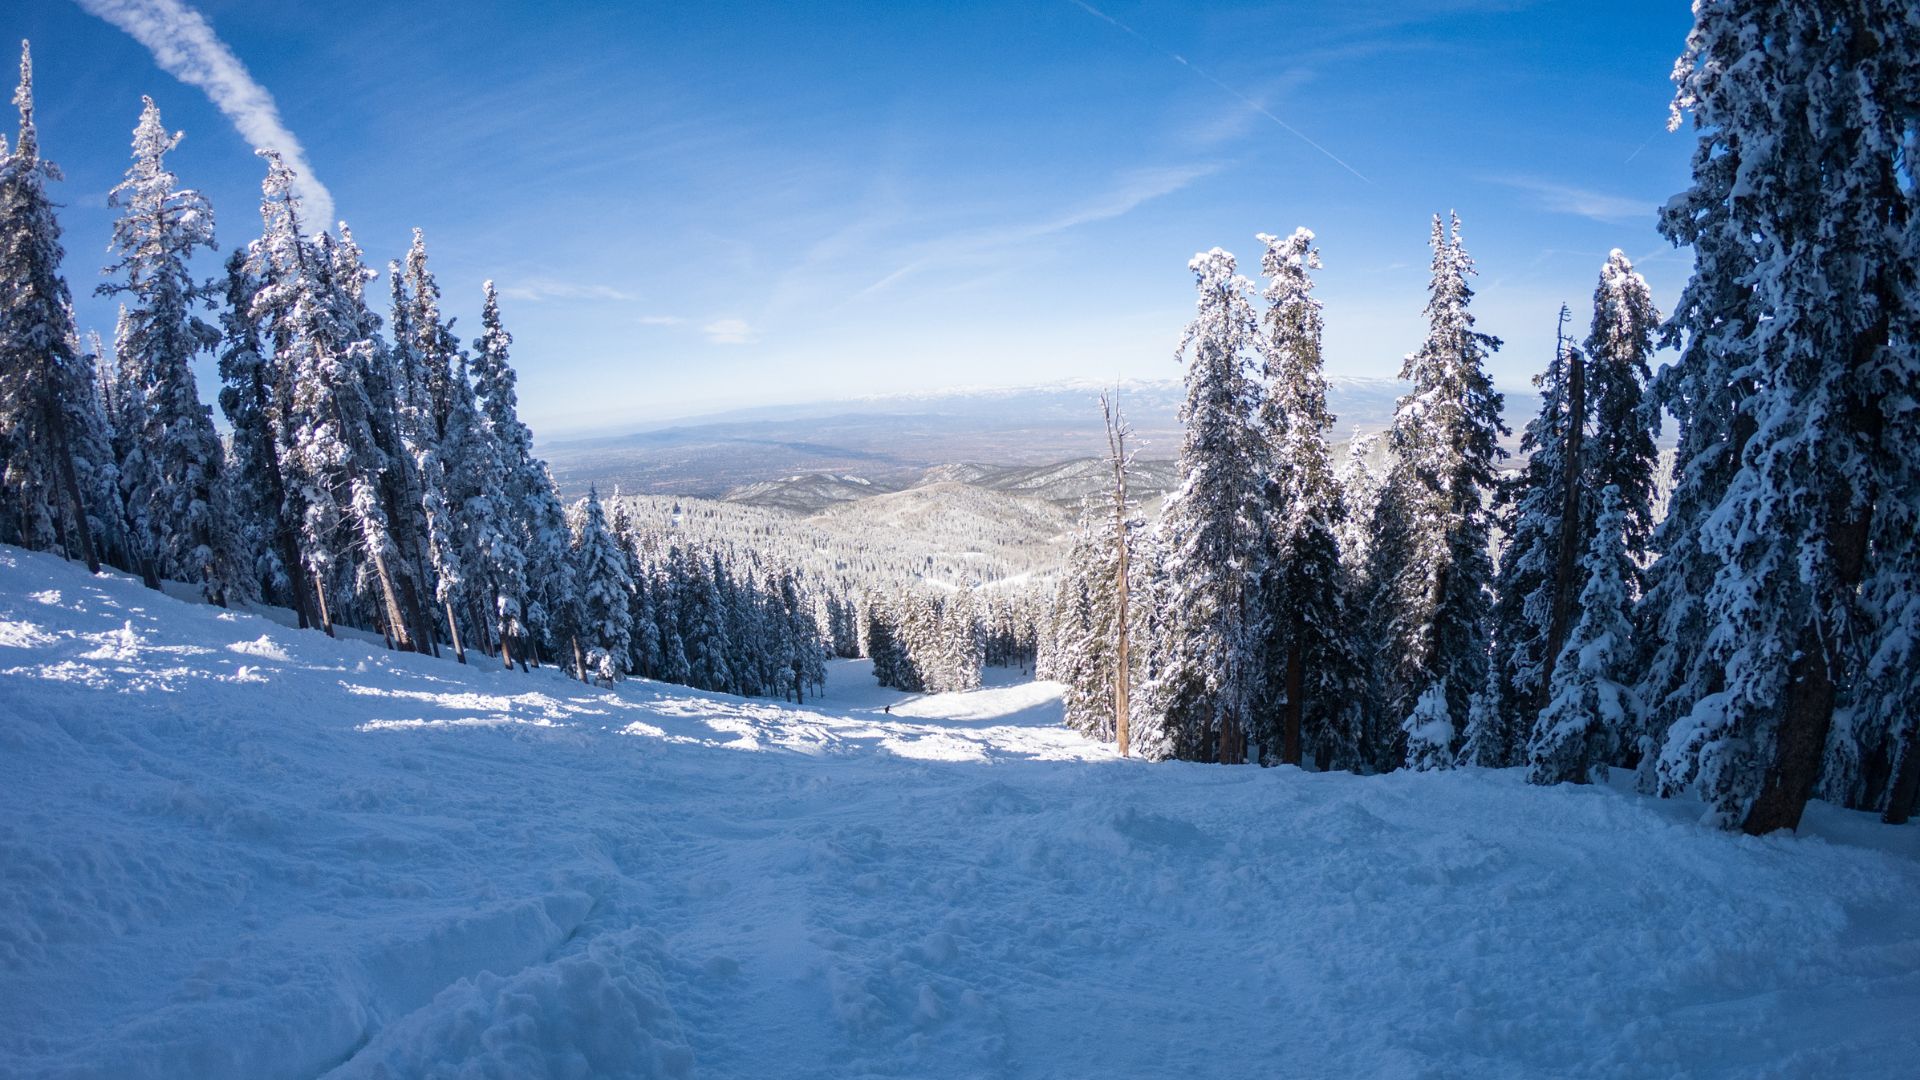 The view down a ski hill